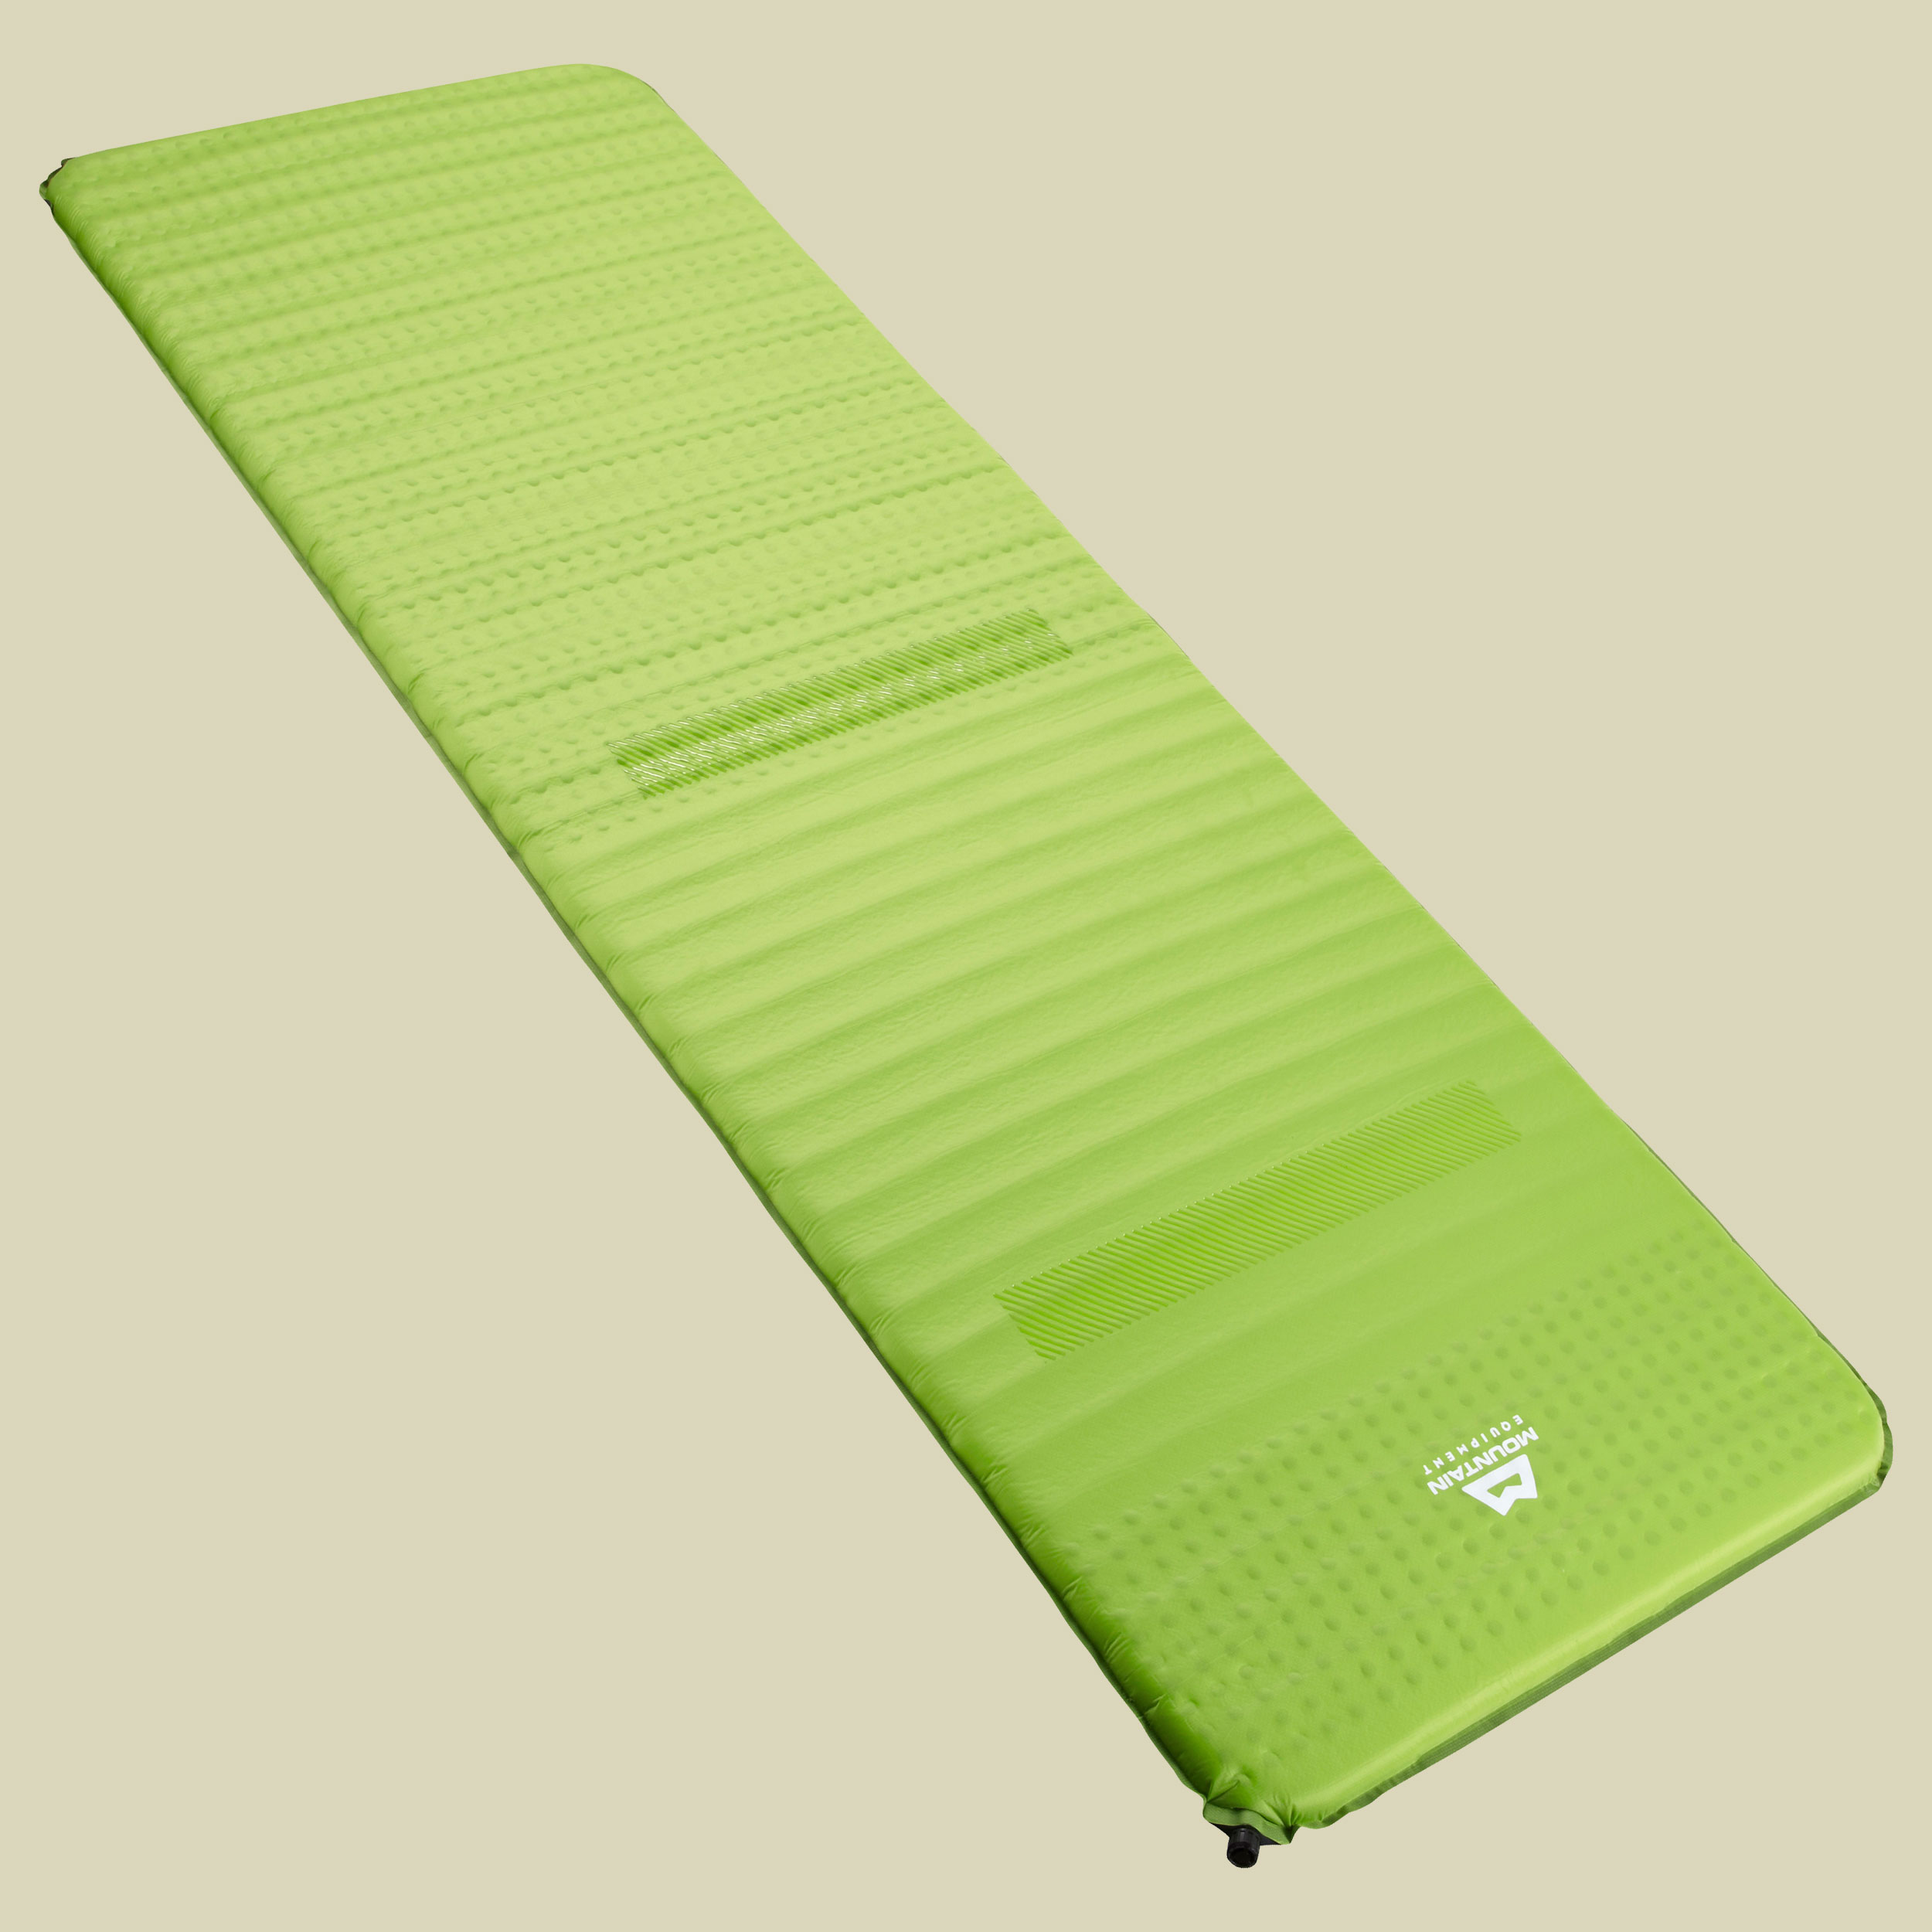 Classic Comfort 3.8 Mat Größe 183 x 51 cm Farbe leaf green